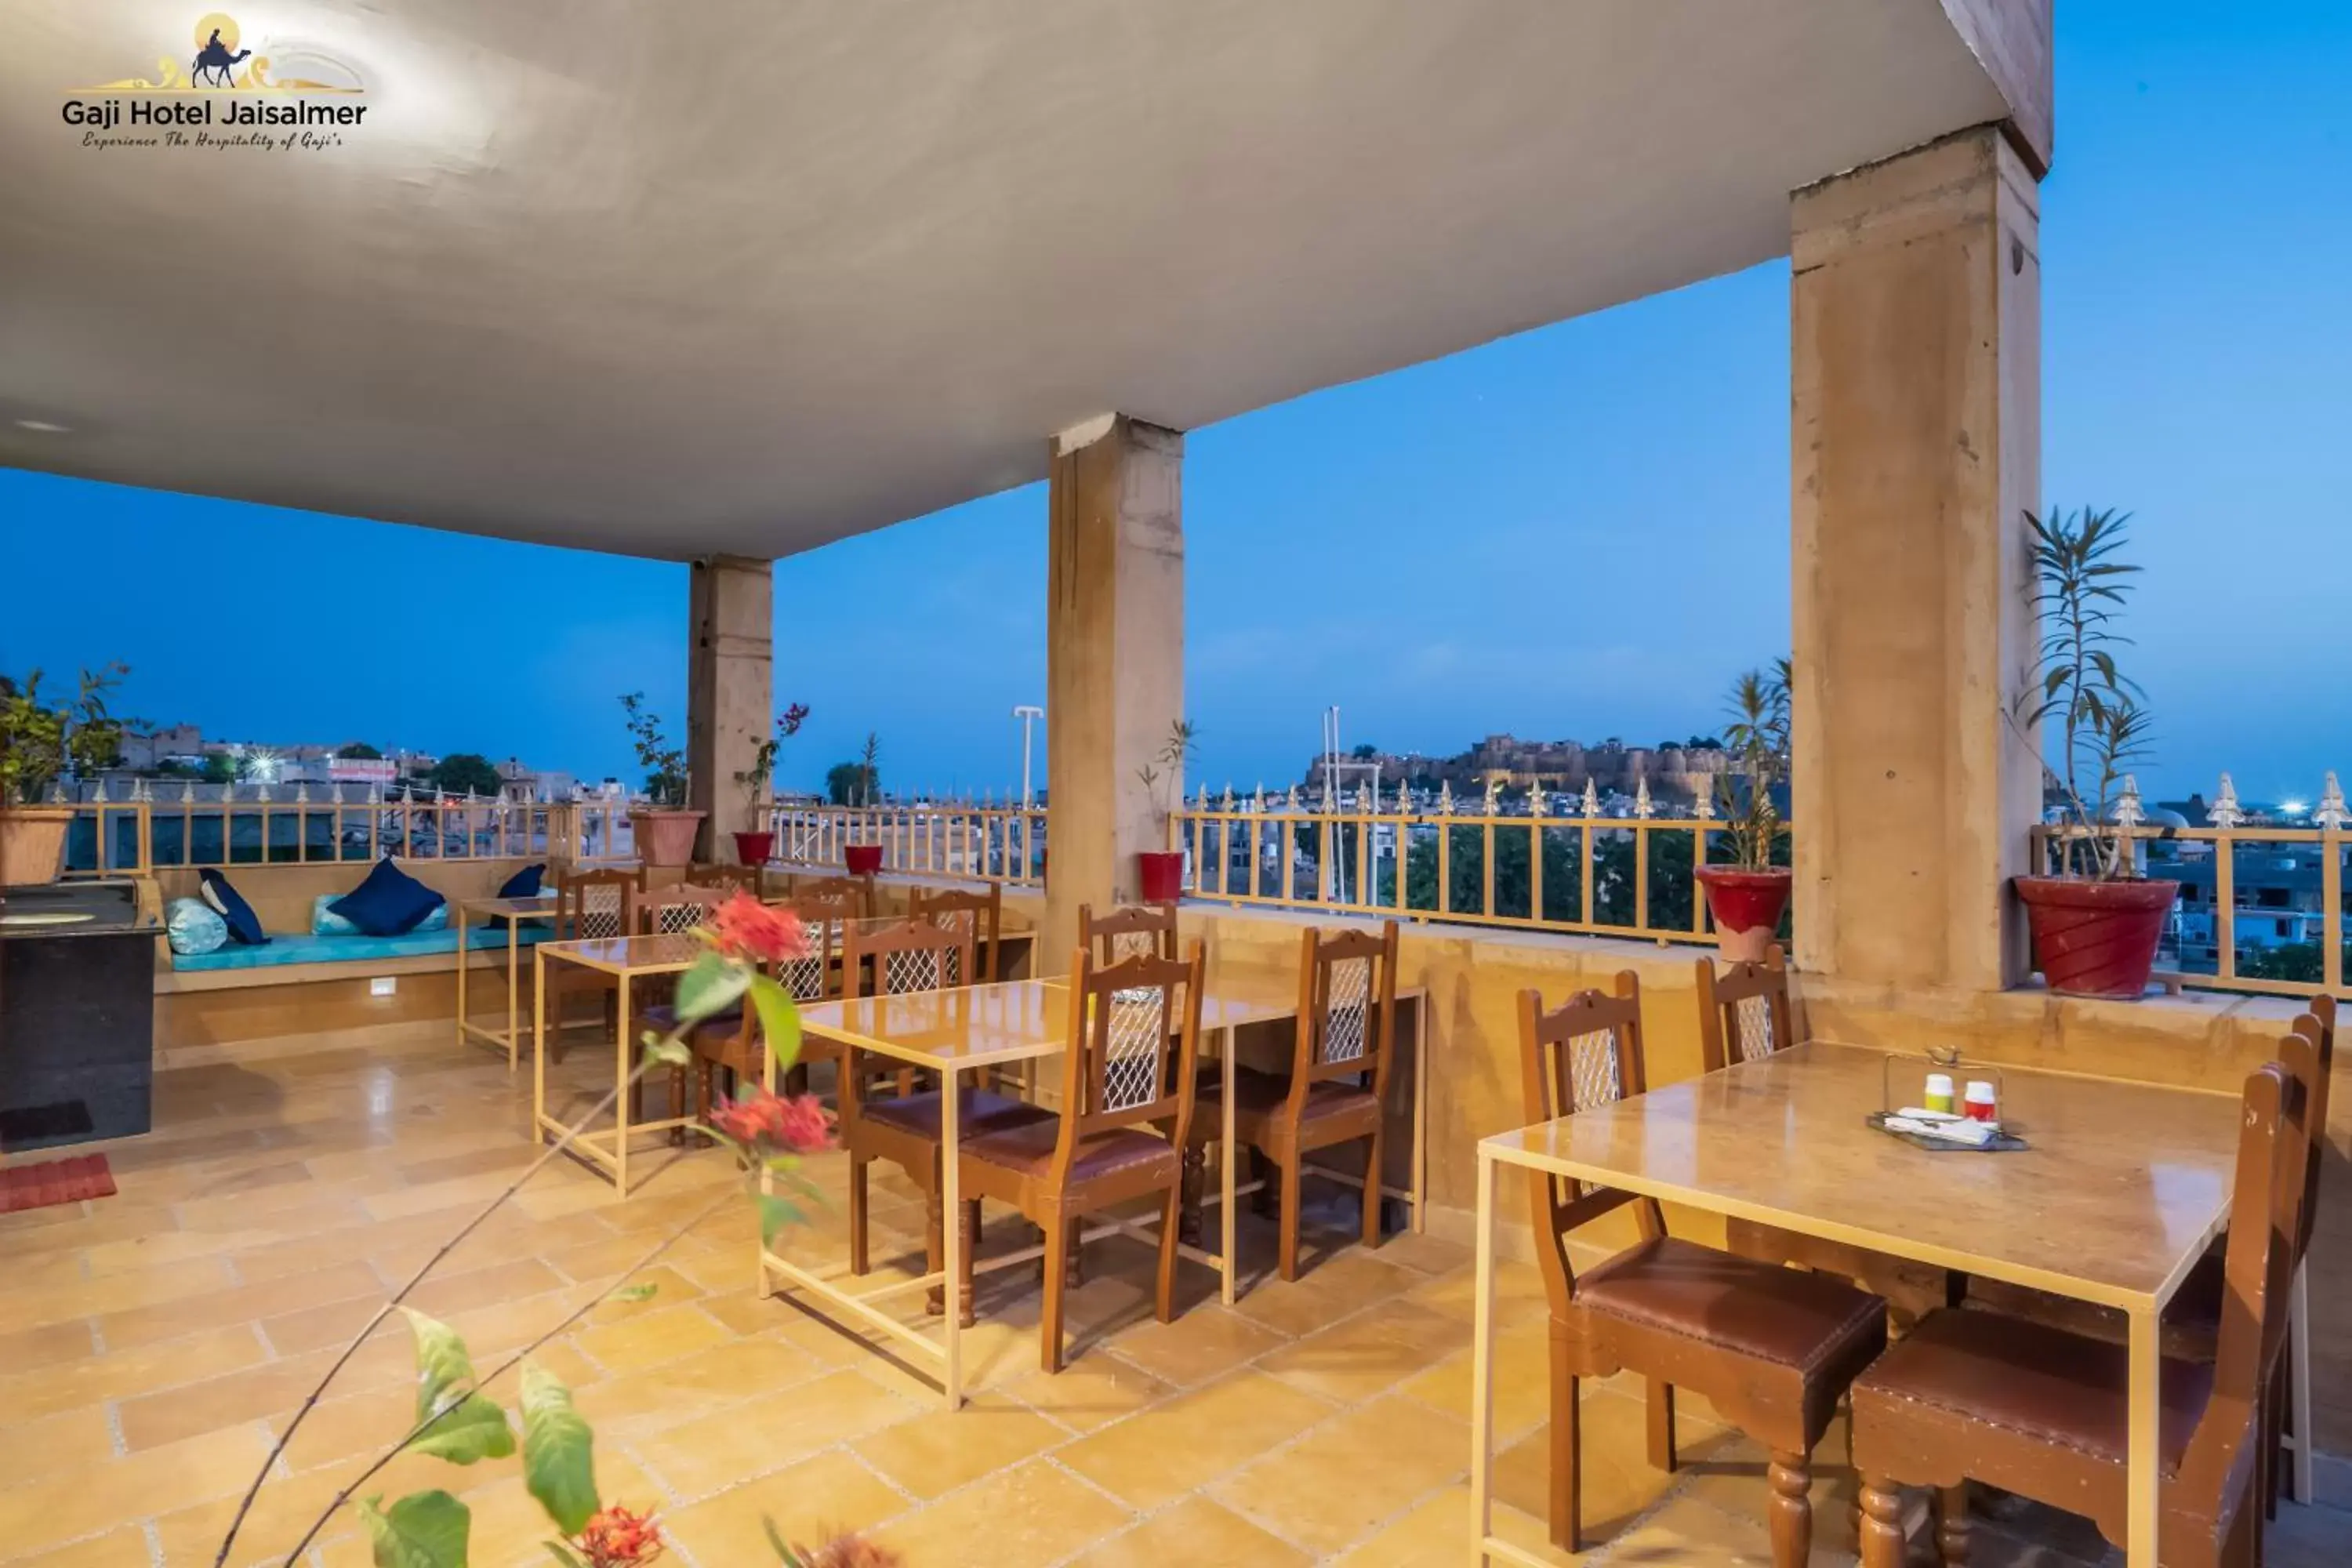 Restaurant/Places to Eat in Gaji Hotel Jaisalmer